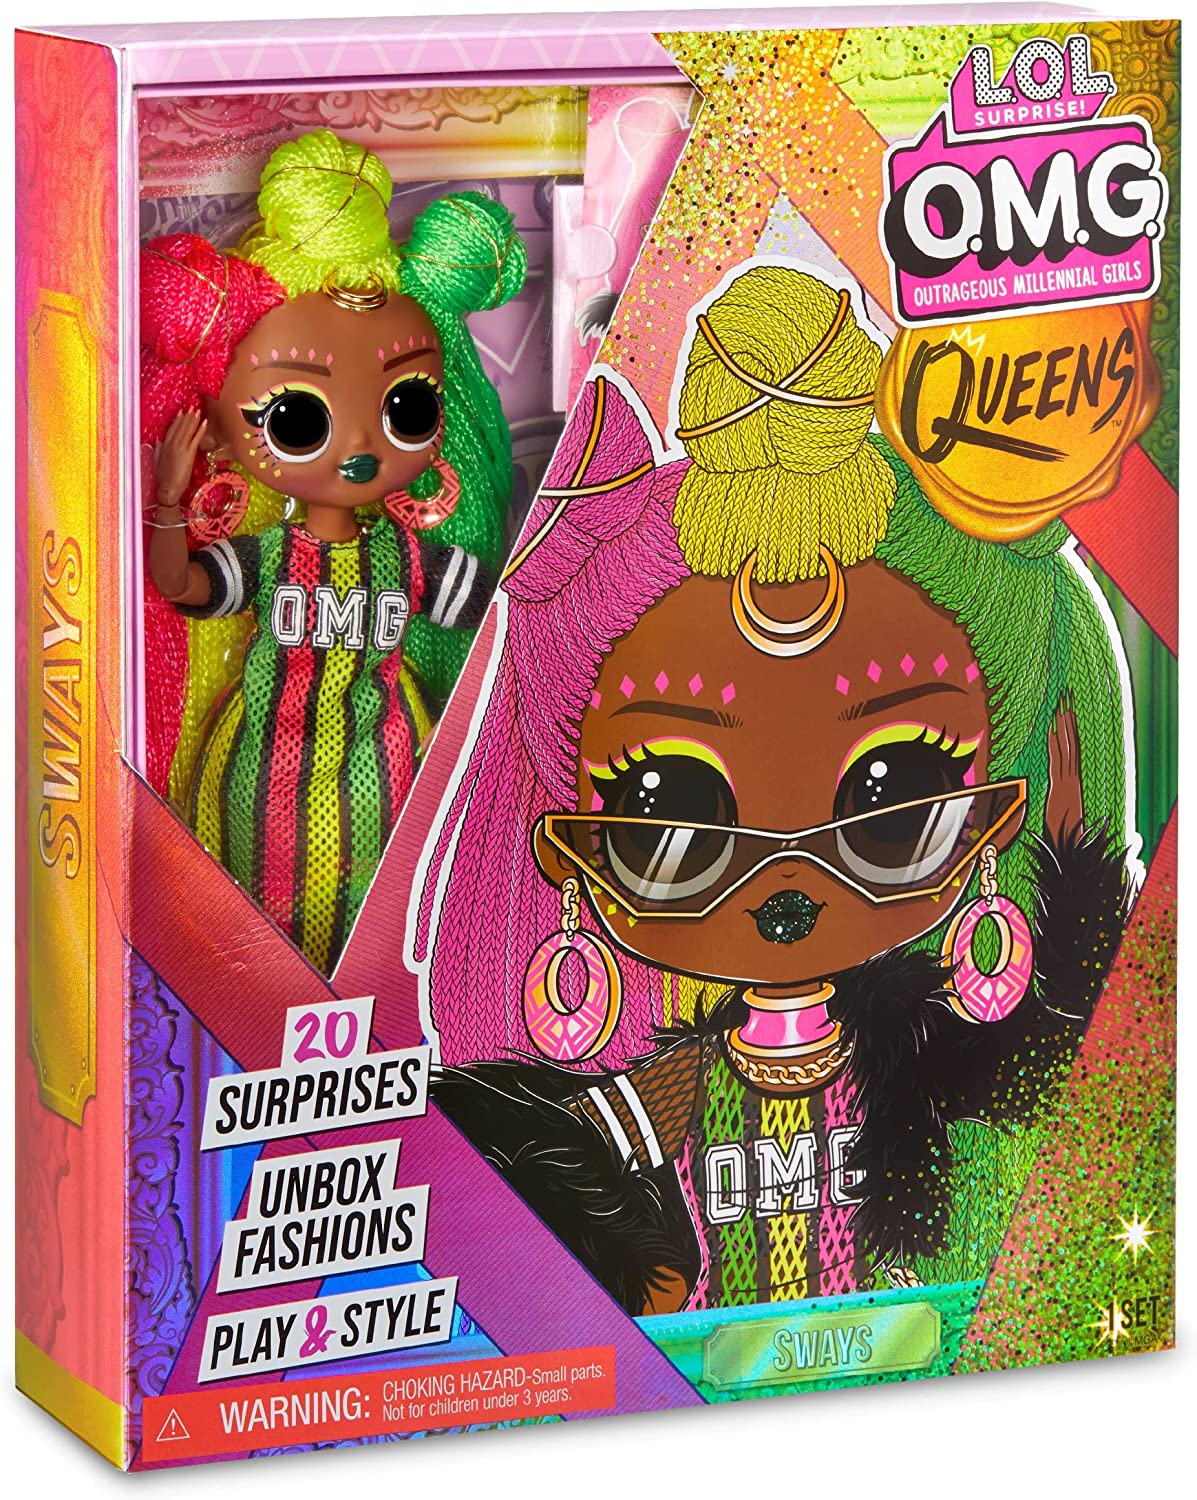 L.O.L. Surprise OMG Queens Sways Doll